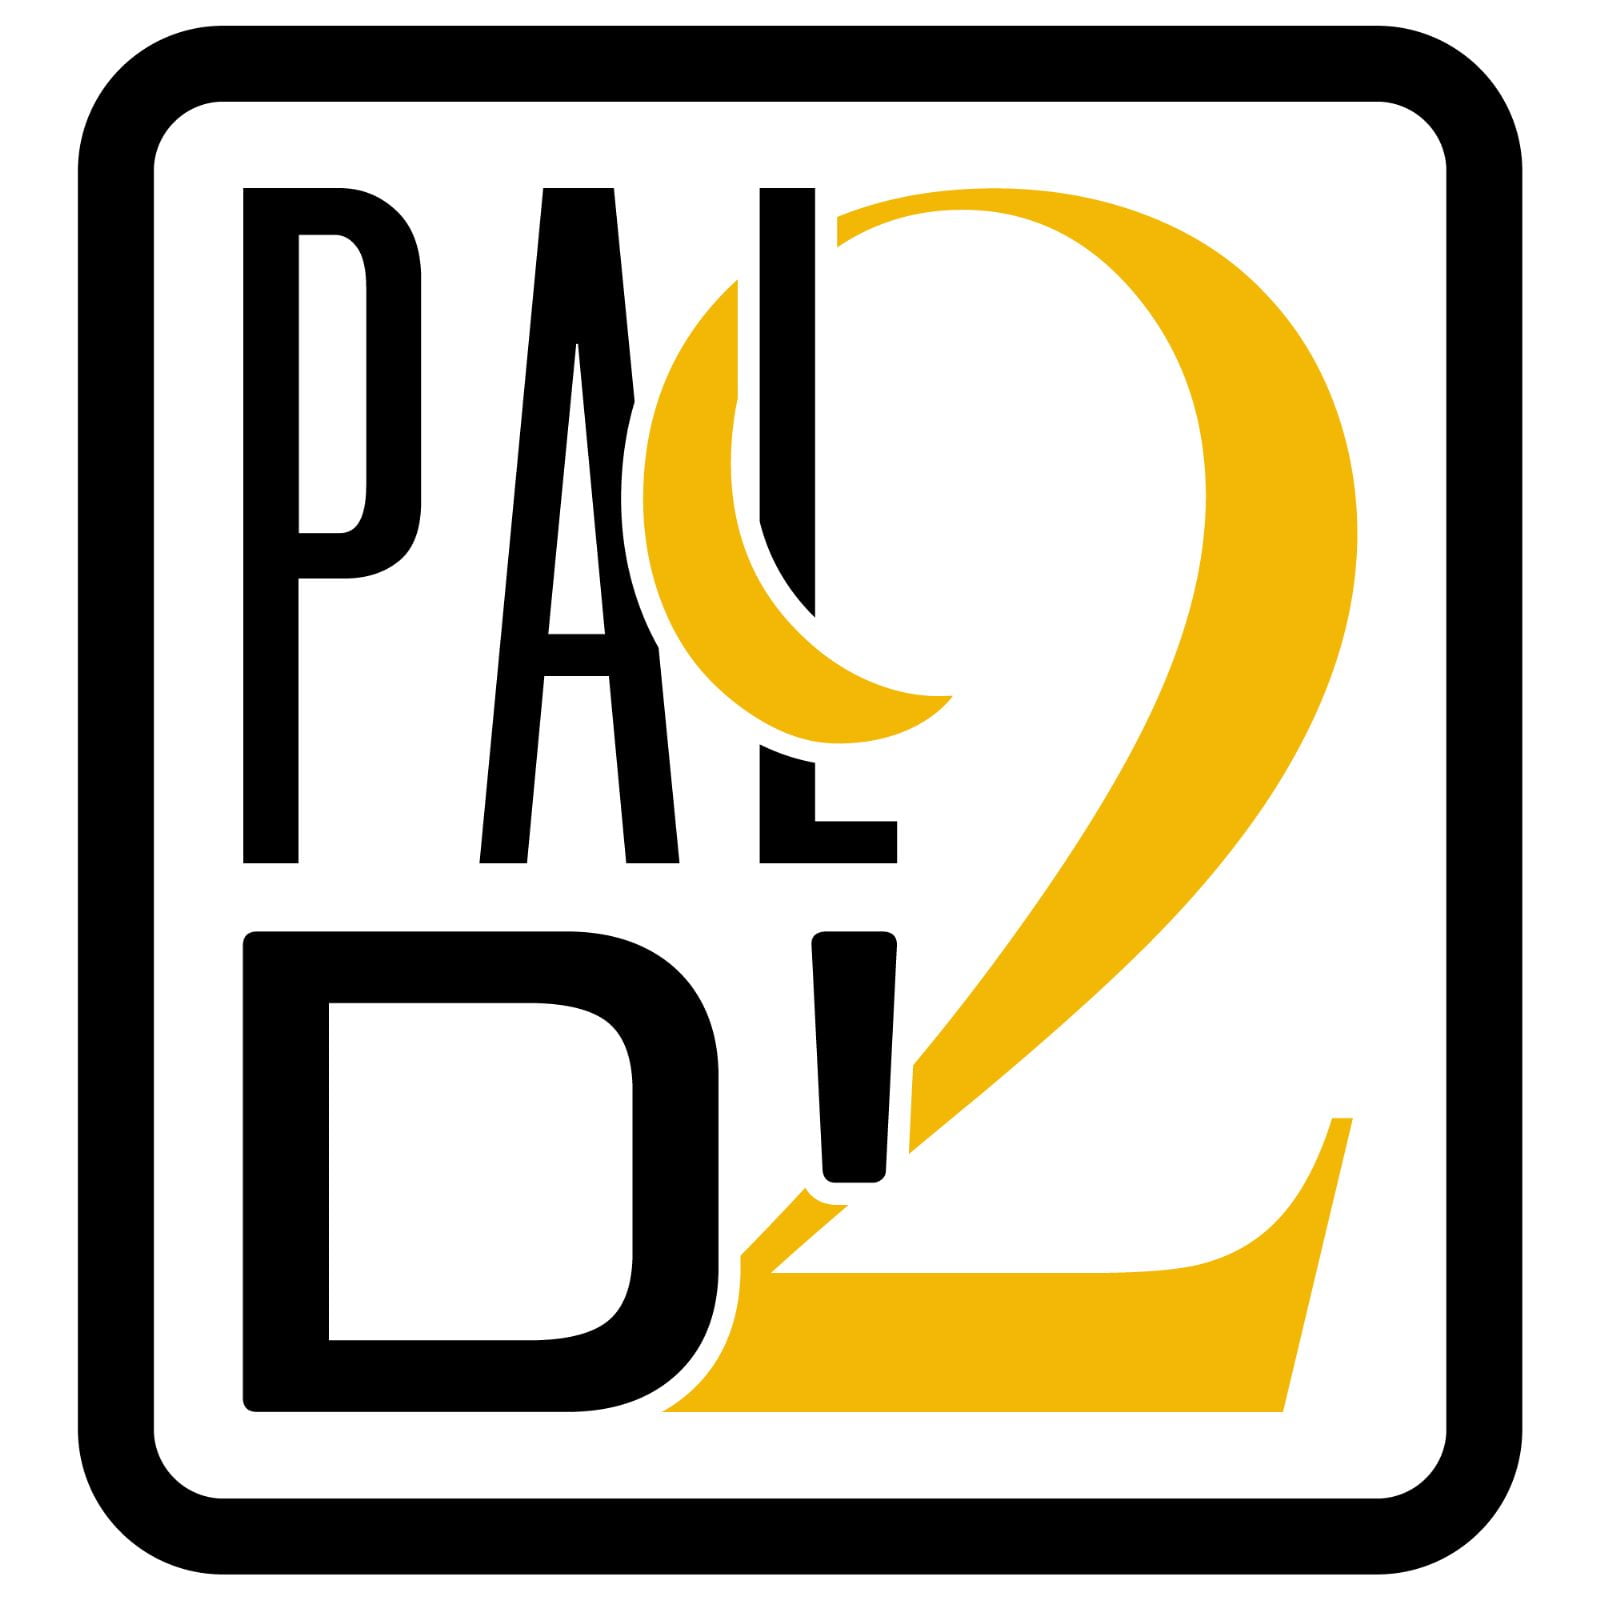 Pald2